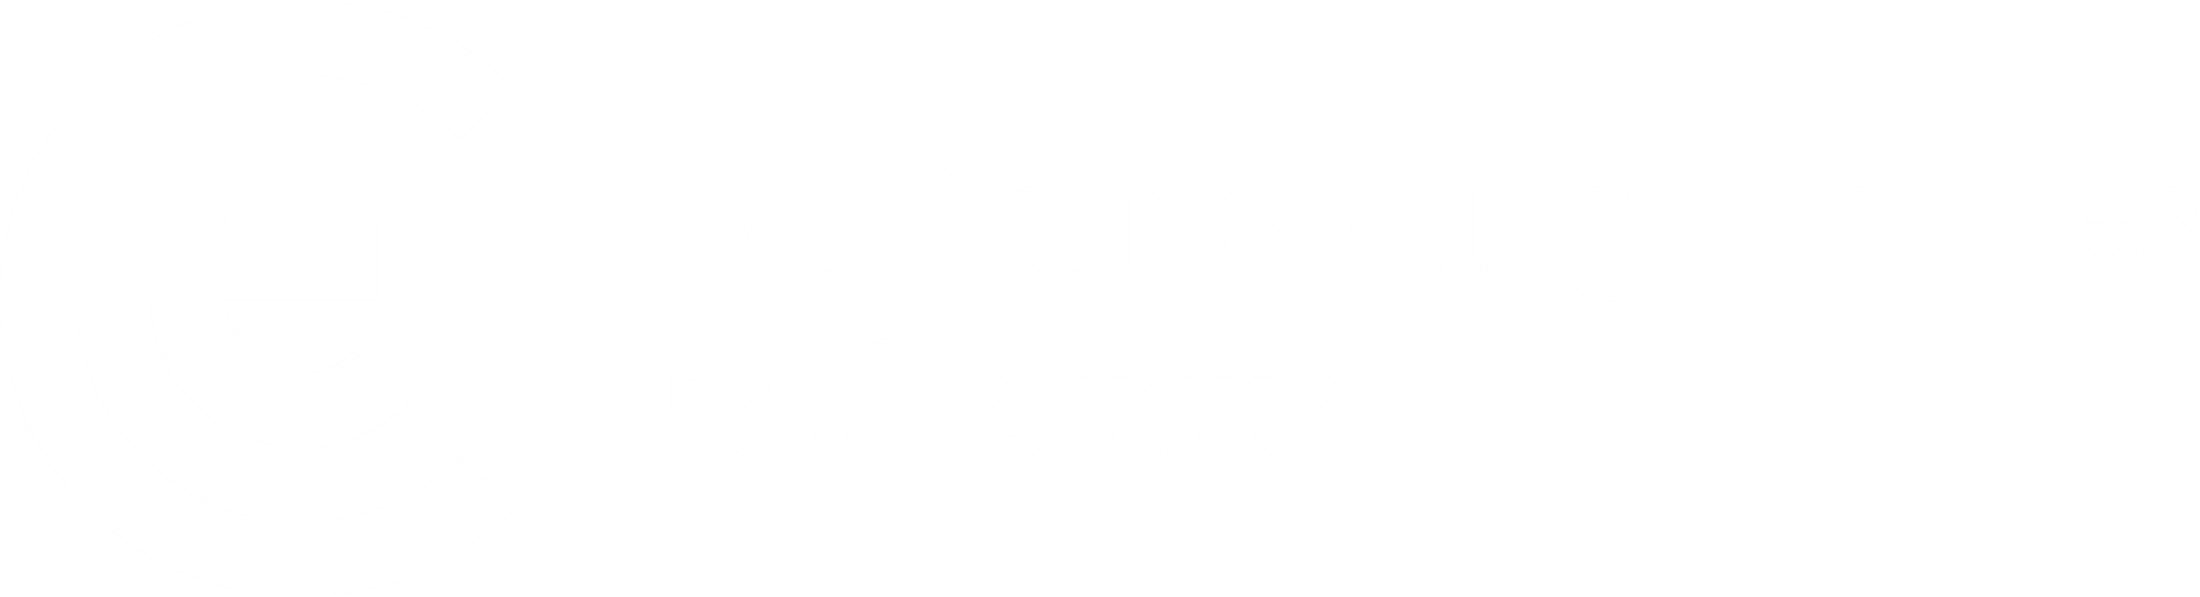 Williamsburg Homes